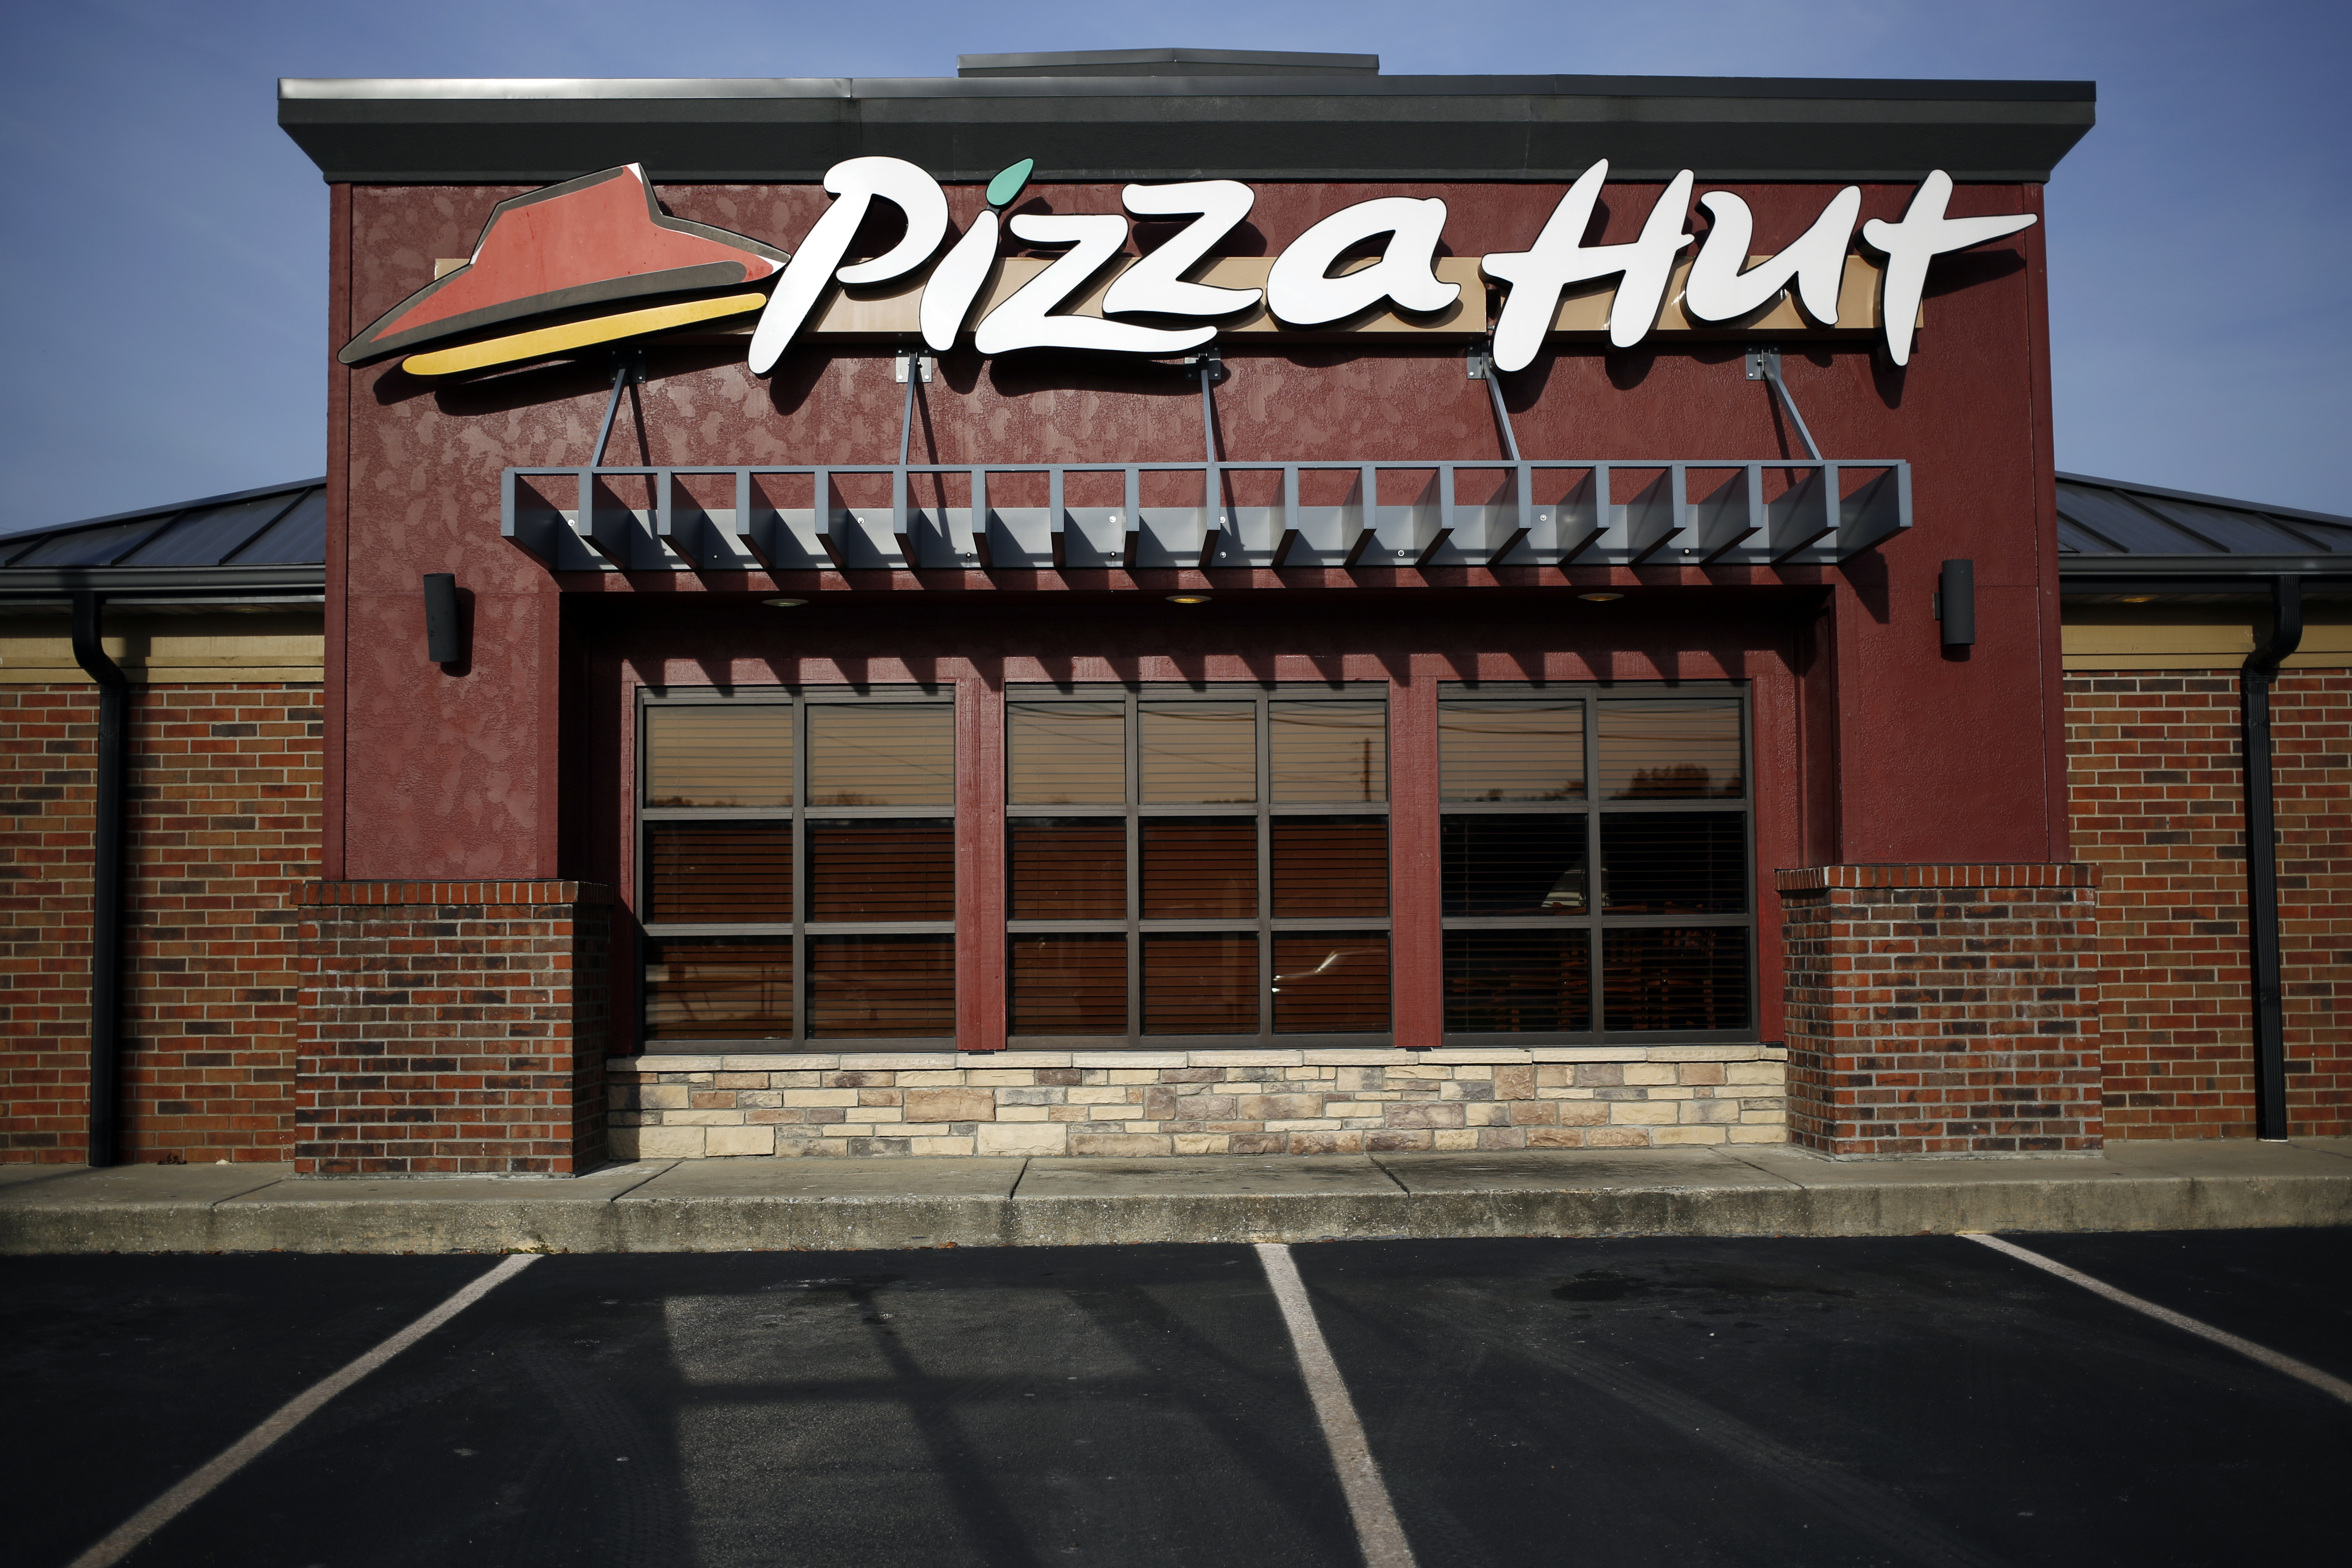 Pizza hut franchise for sale near me